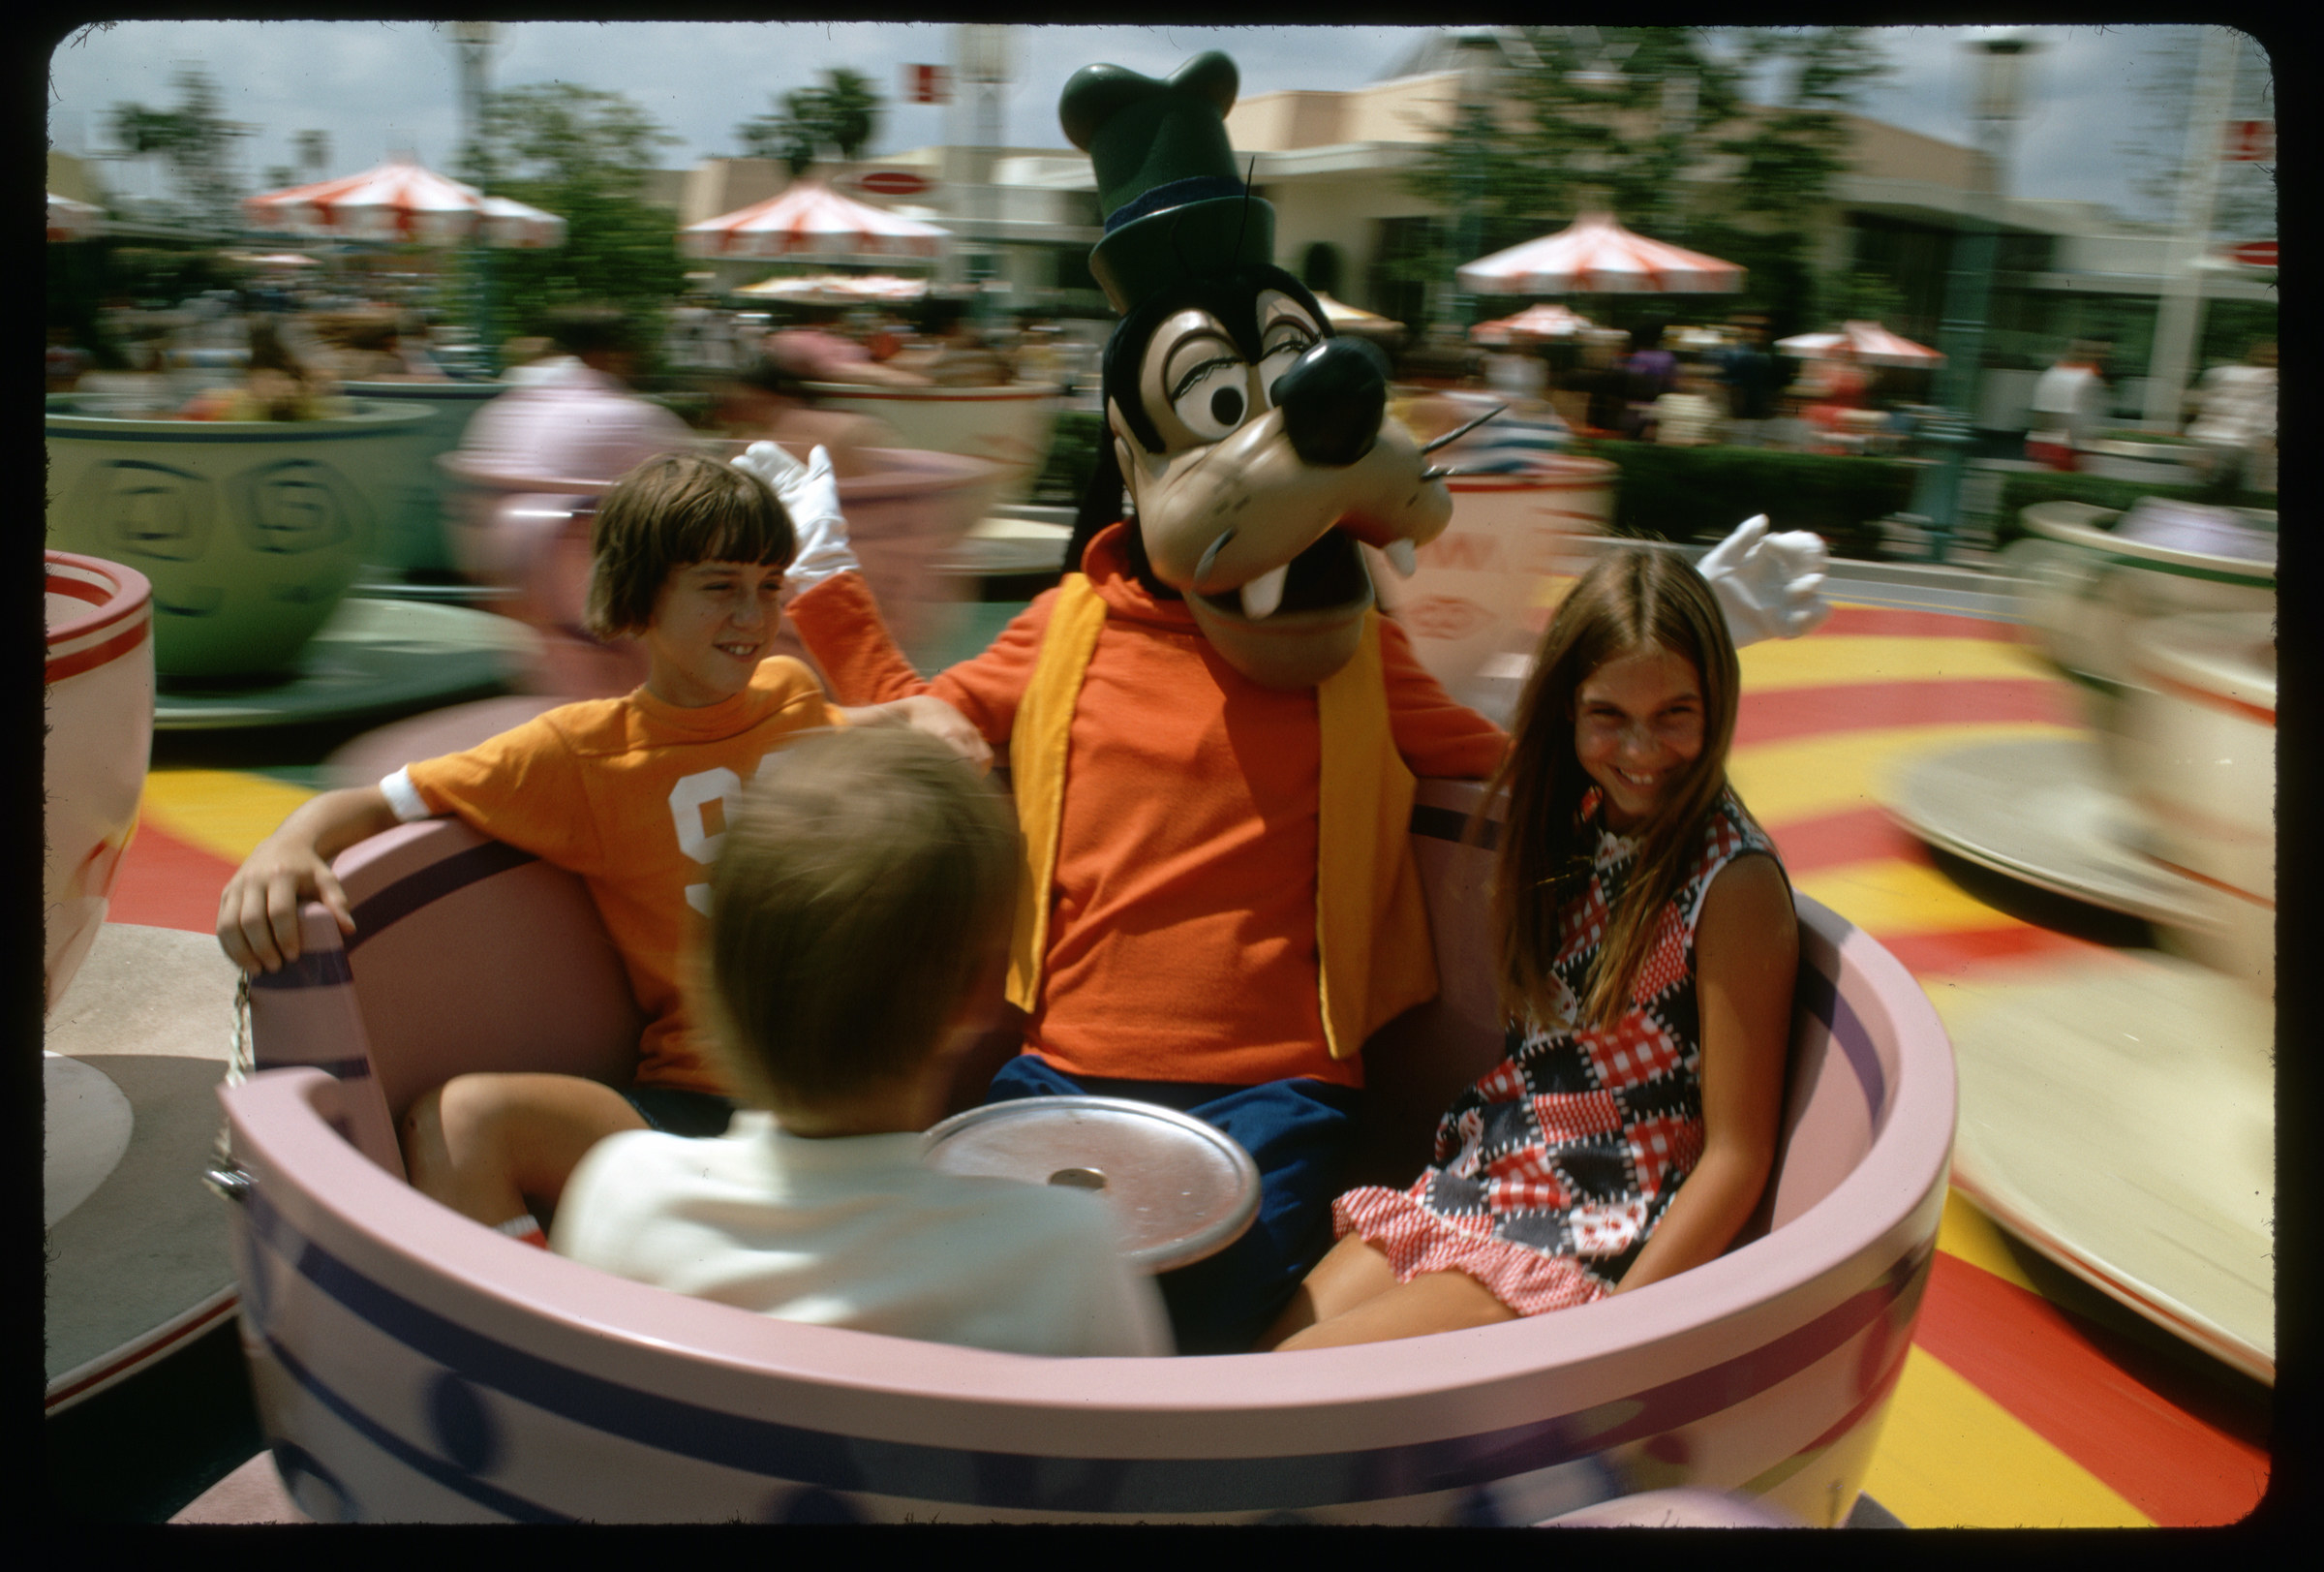 Three children enjoy a ride at Disney World with Goofy the Disney character